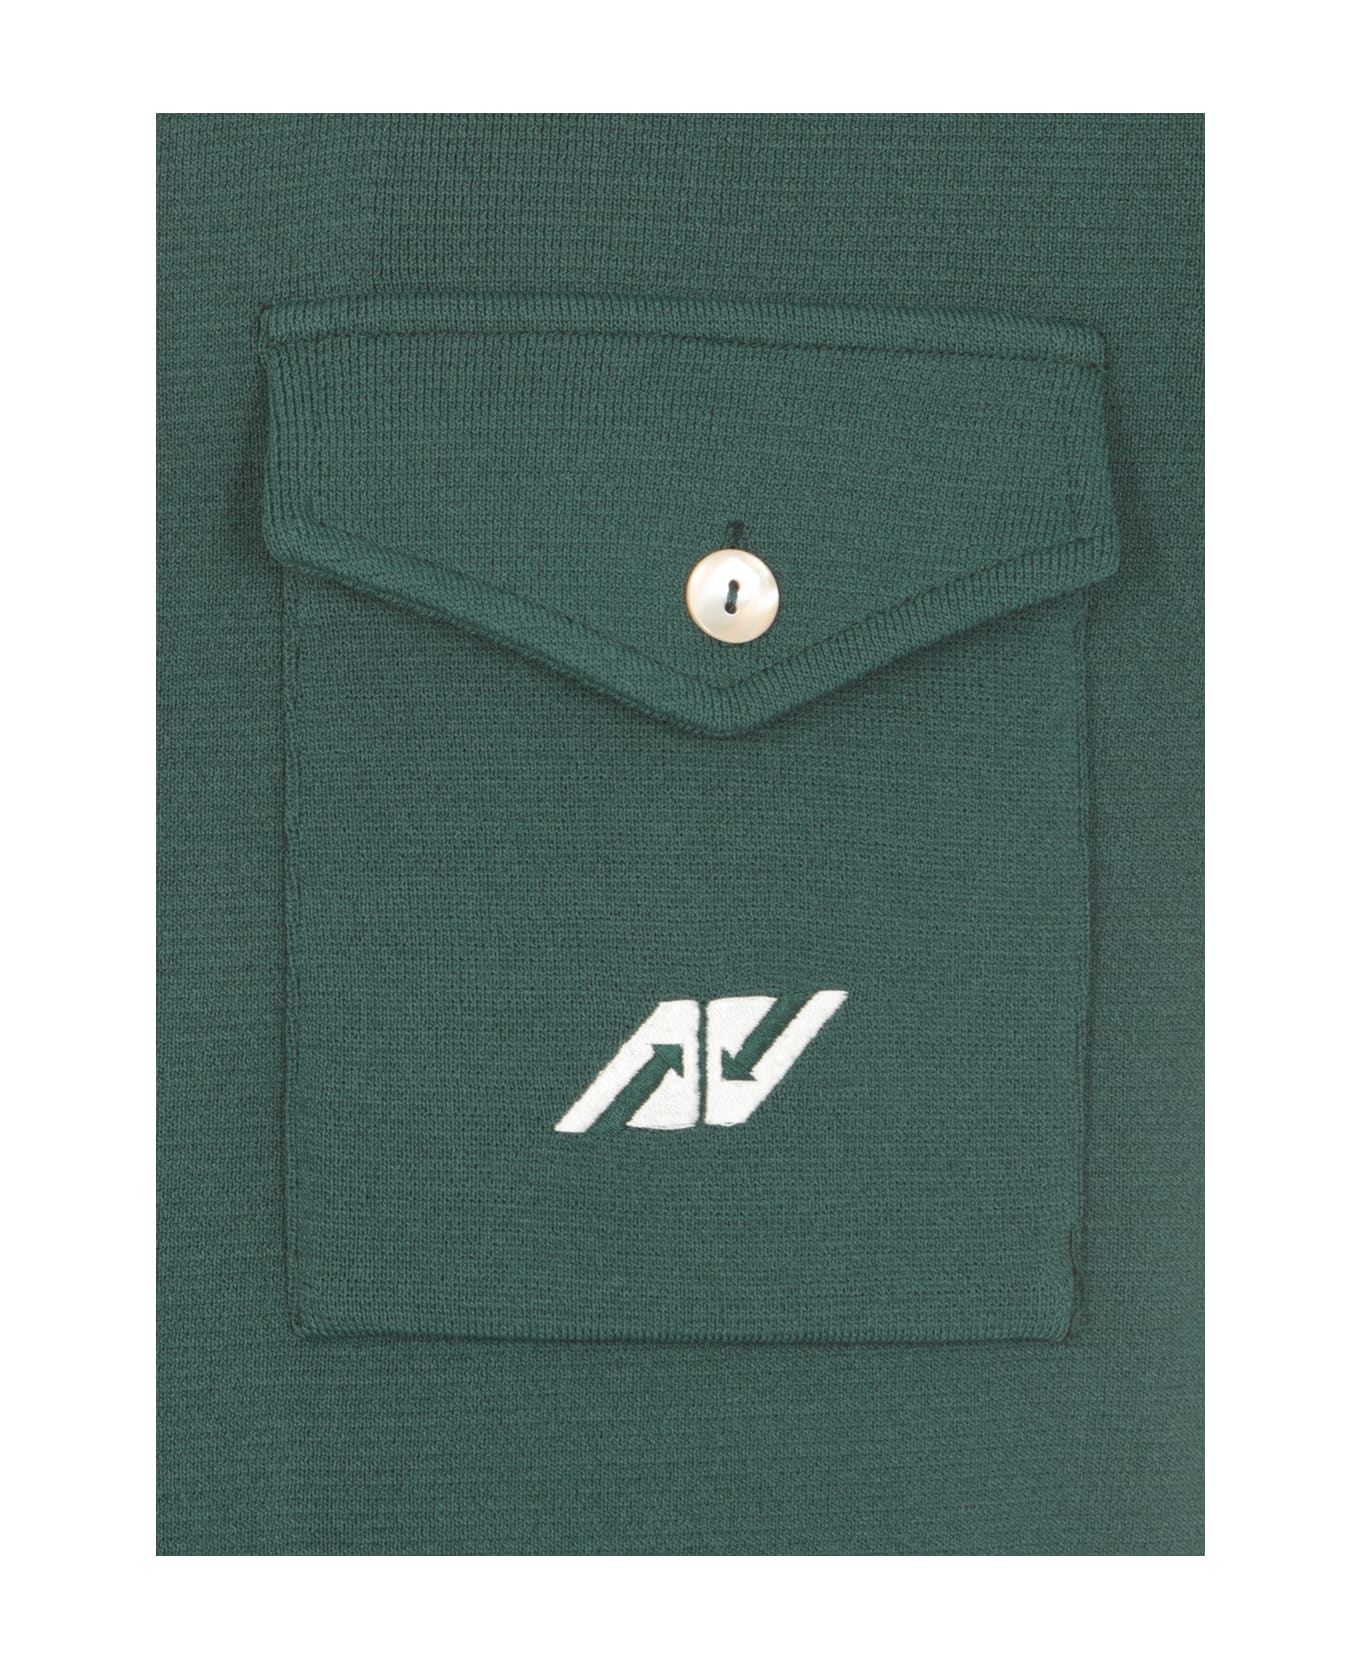 Autry Jacket Sporty Casual Jacket - Green ジャケット